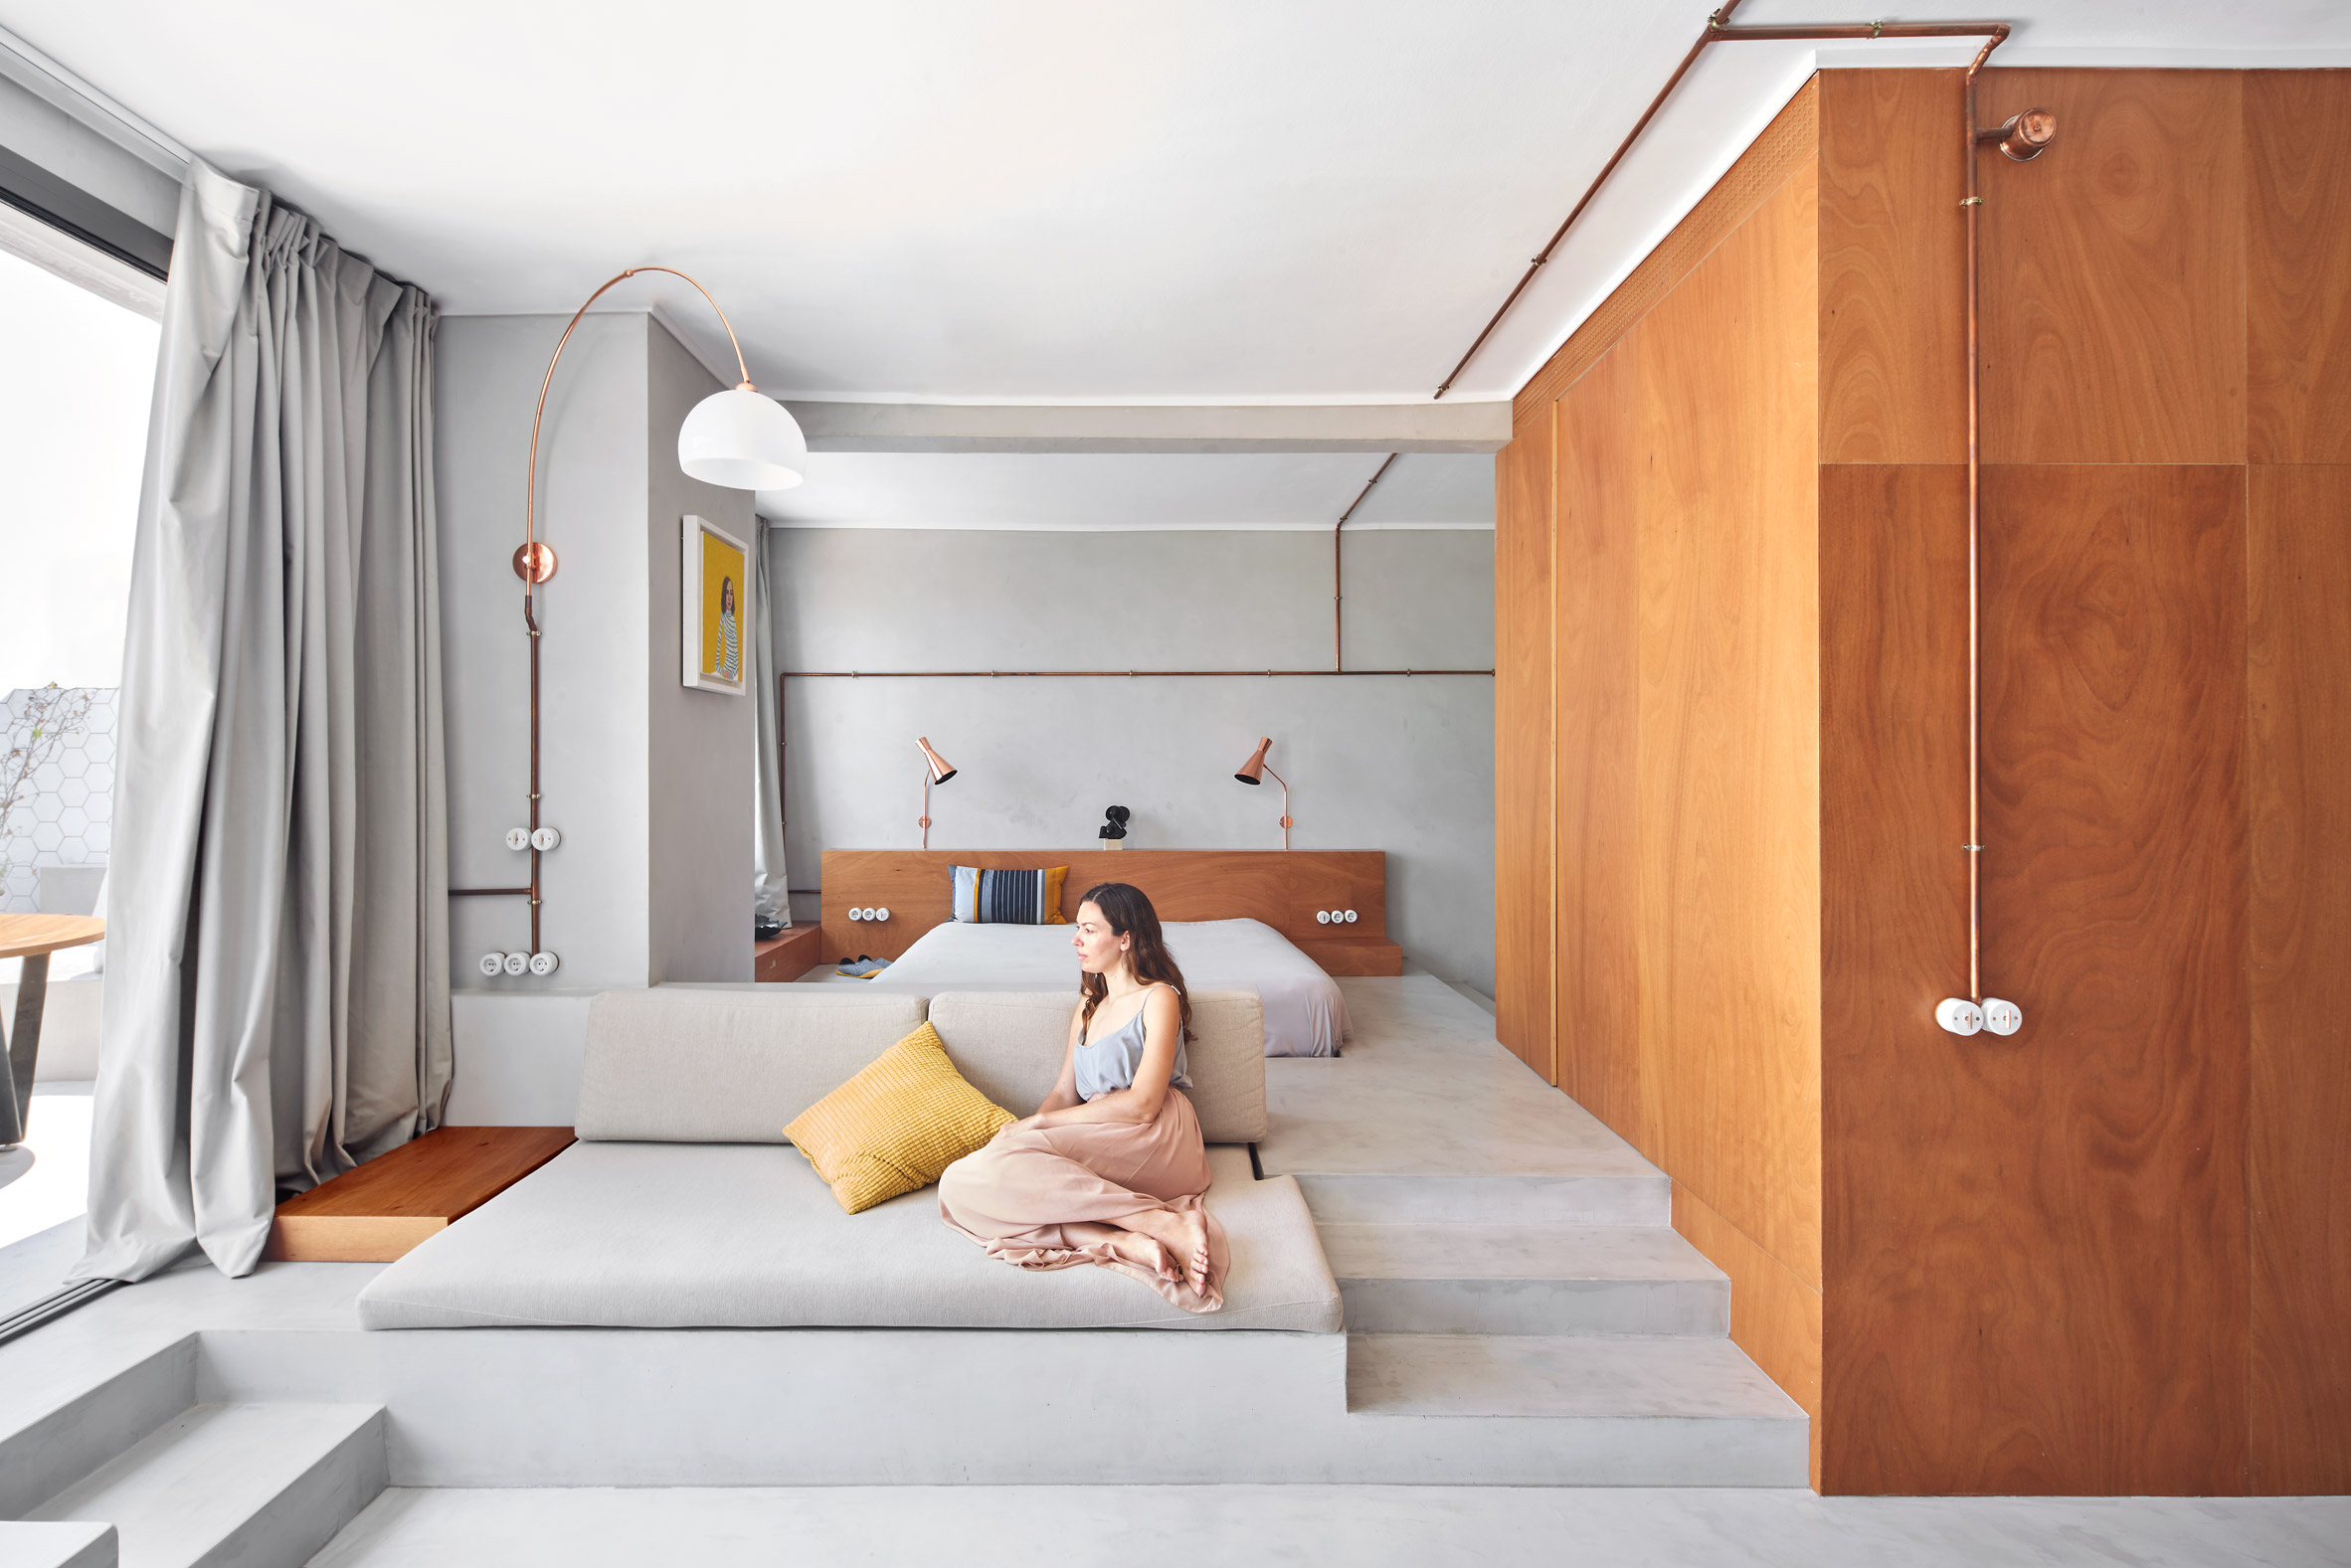 Interiors of Barcelona marina apartment, designed by Cometa Architects